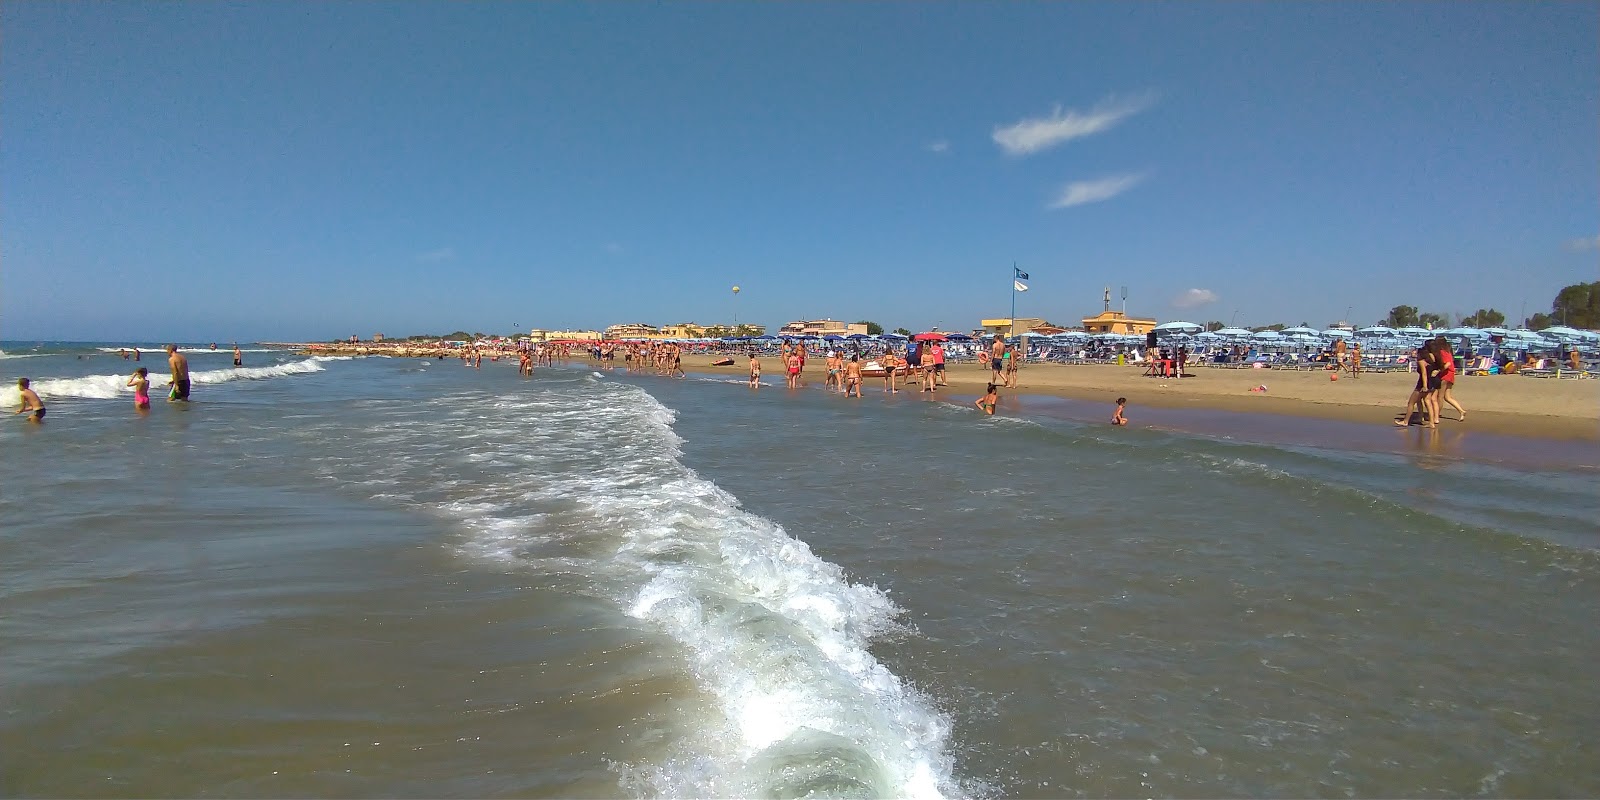 Fotografie cu Spiaggia Attrezzata cu o suprafață de apa albastra